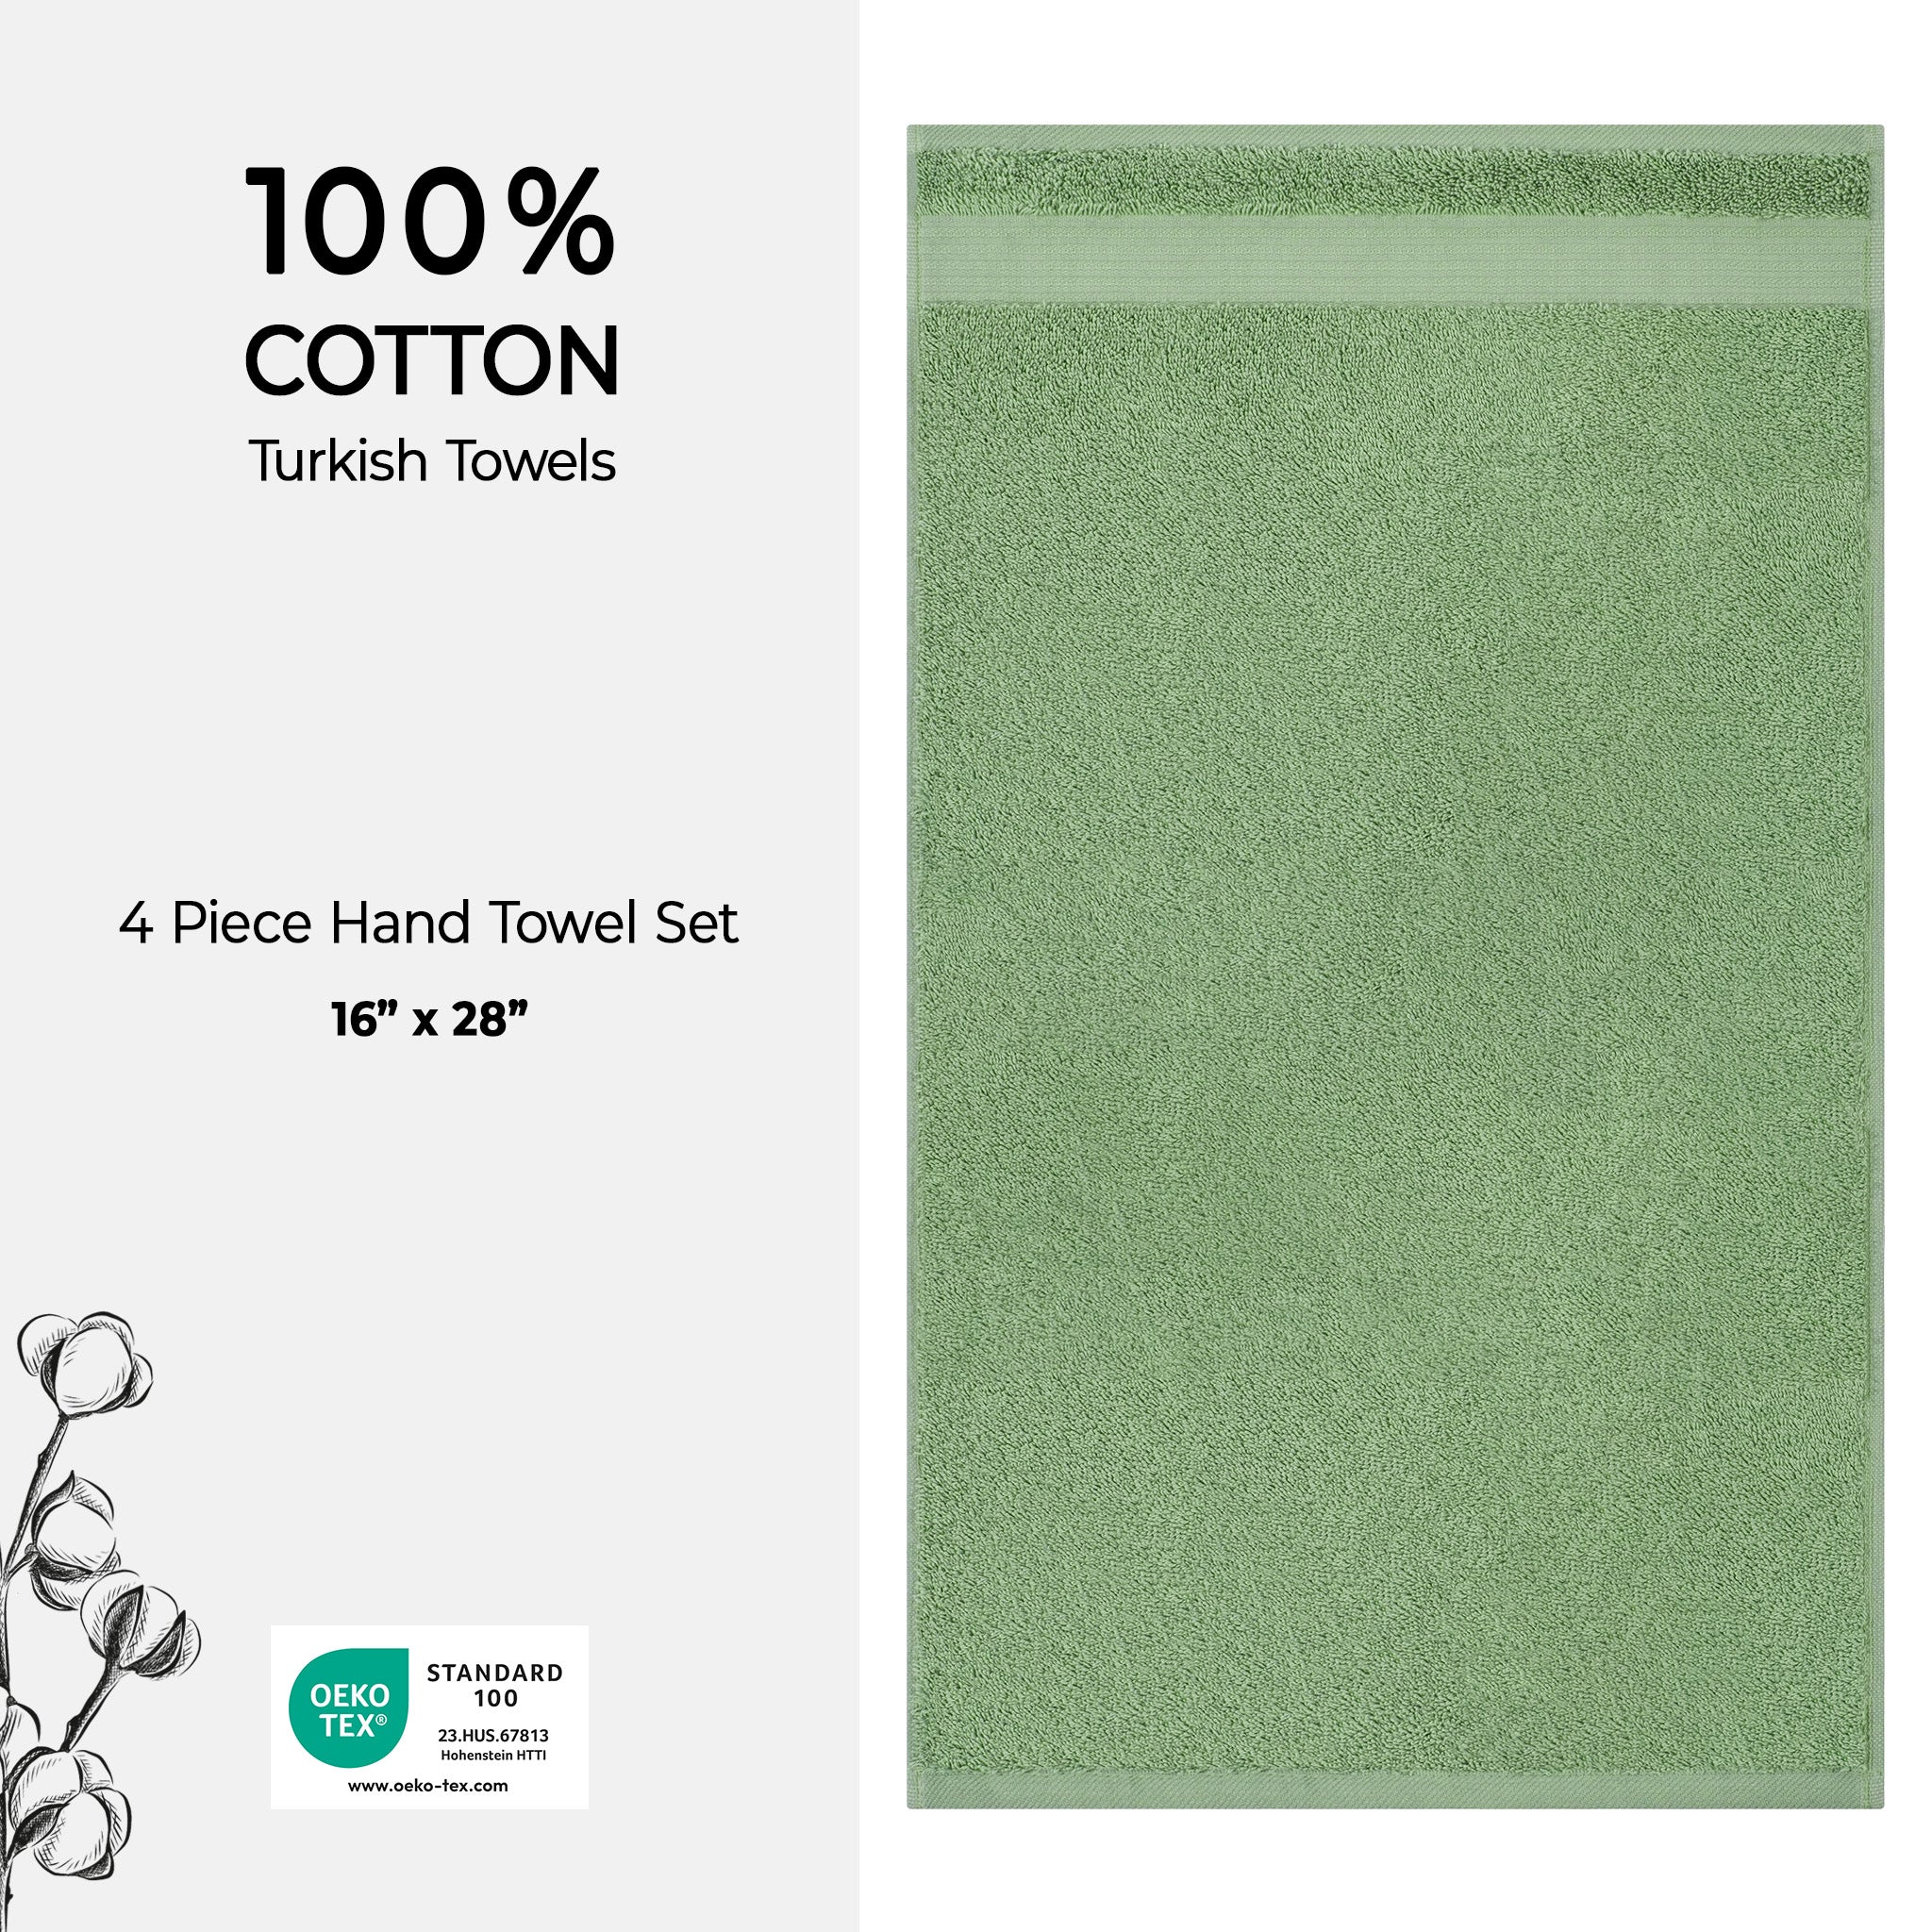 American Soft Linen Bekos 100% Cotton Turkish Towels, 4 Piece Hand Towel Set -sage-green-04